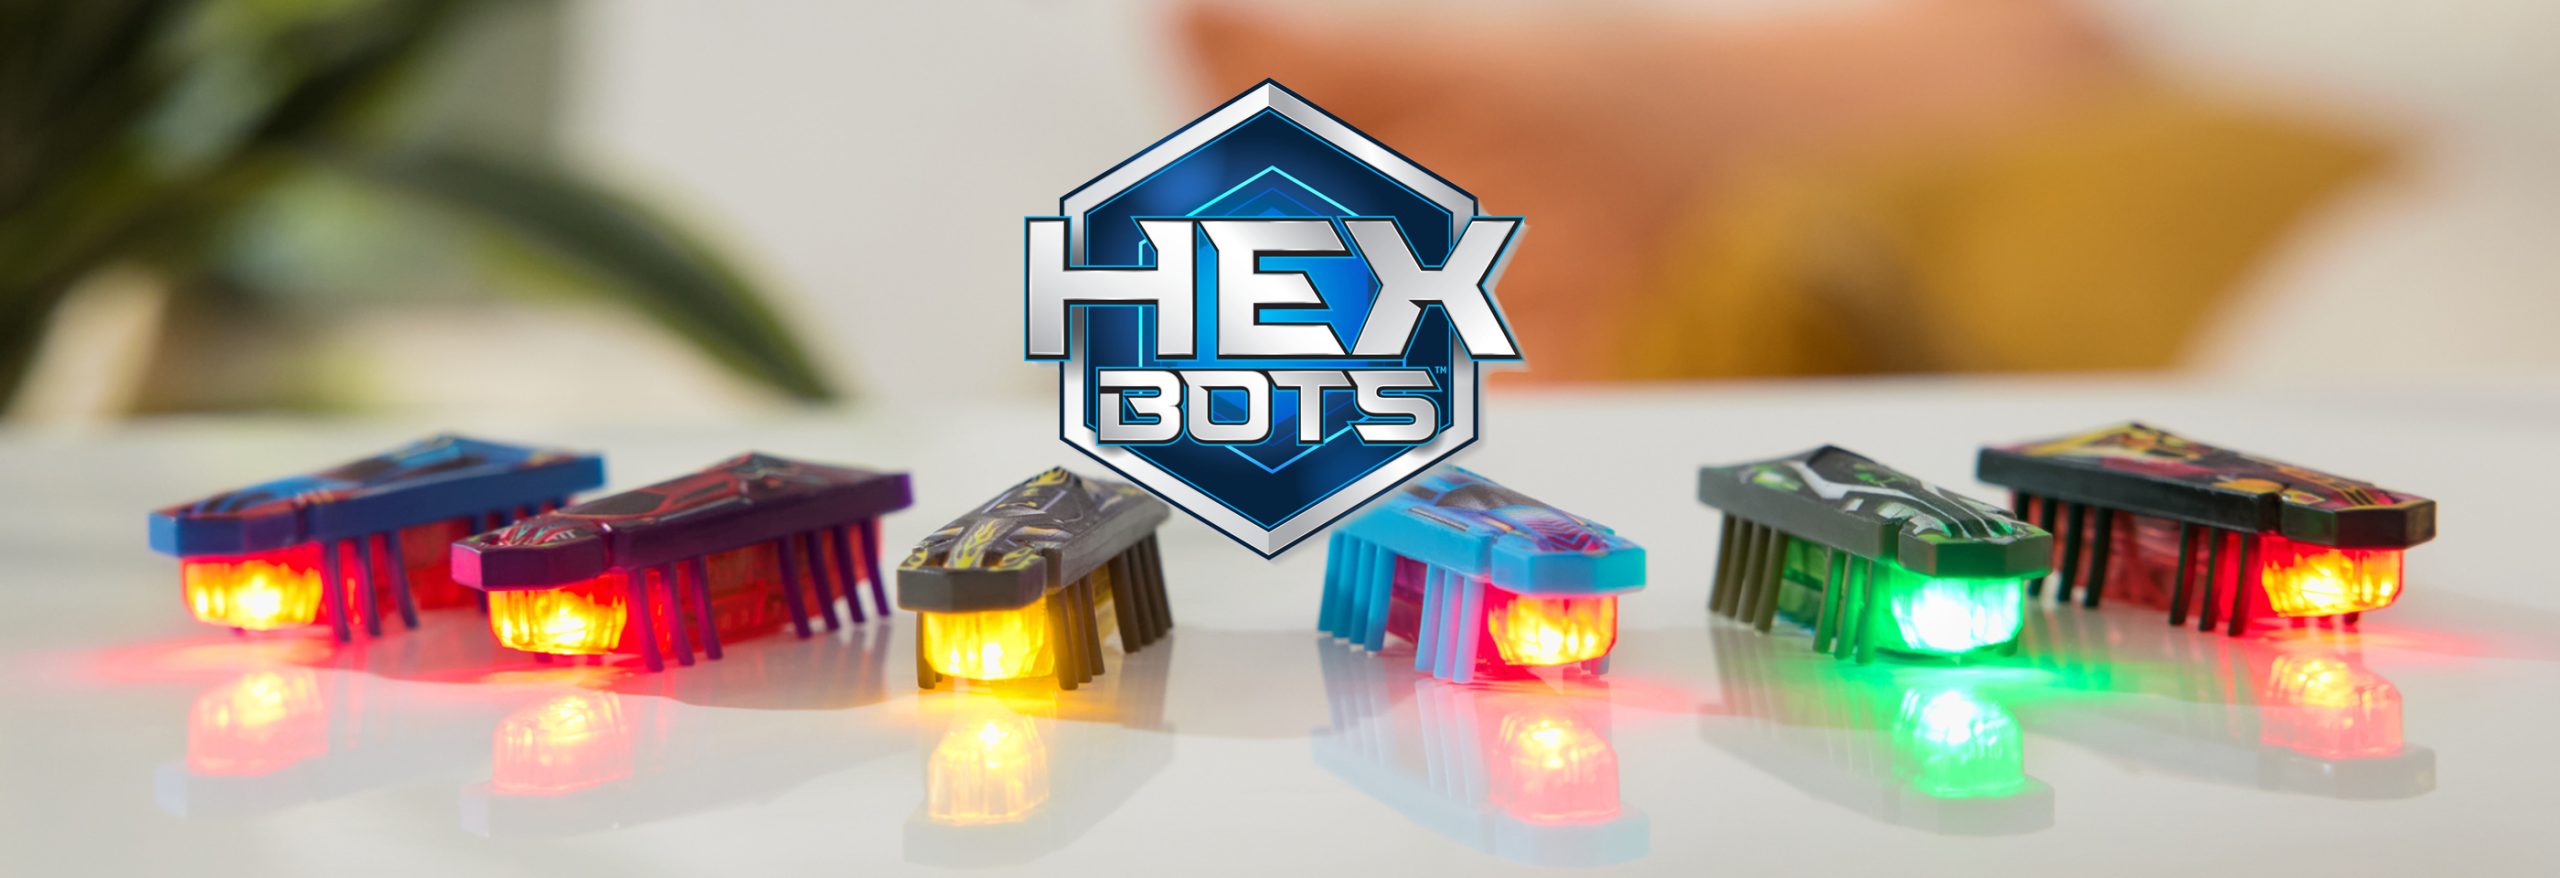 Hexbots